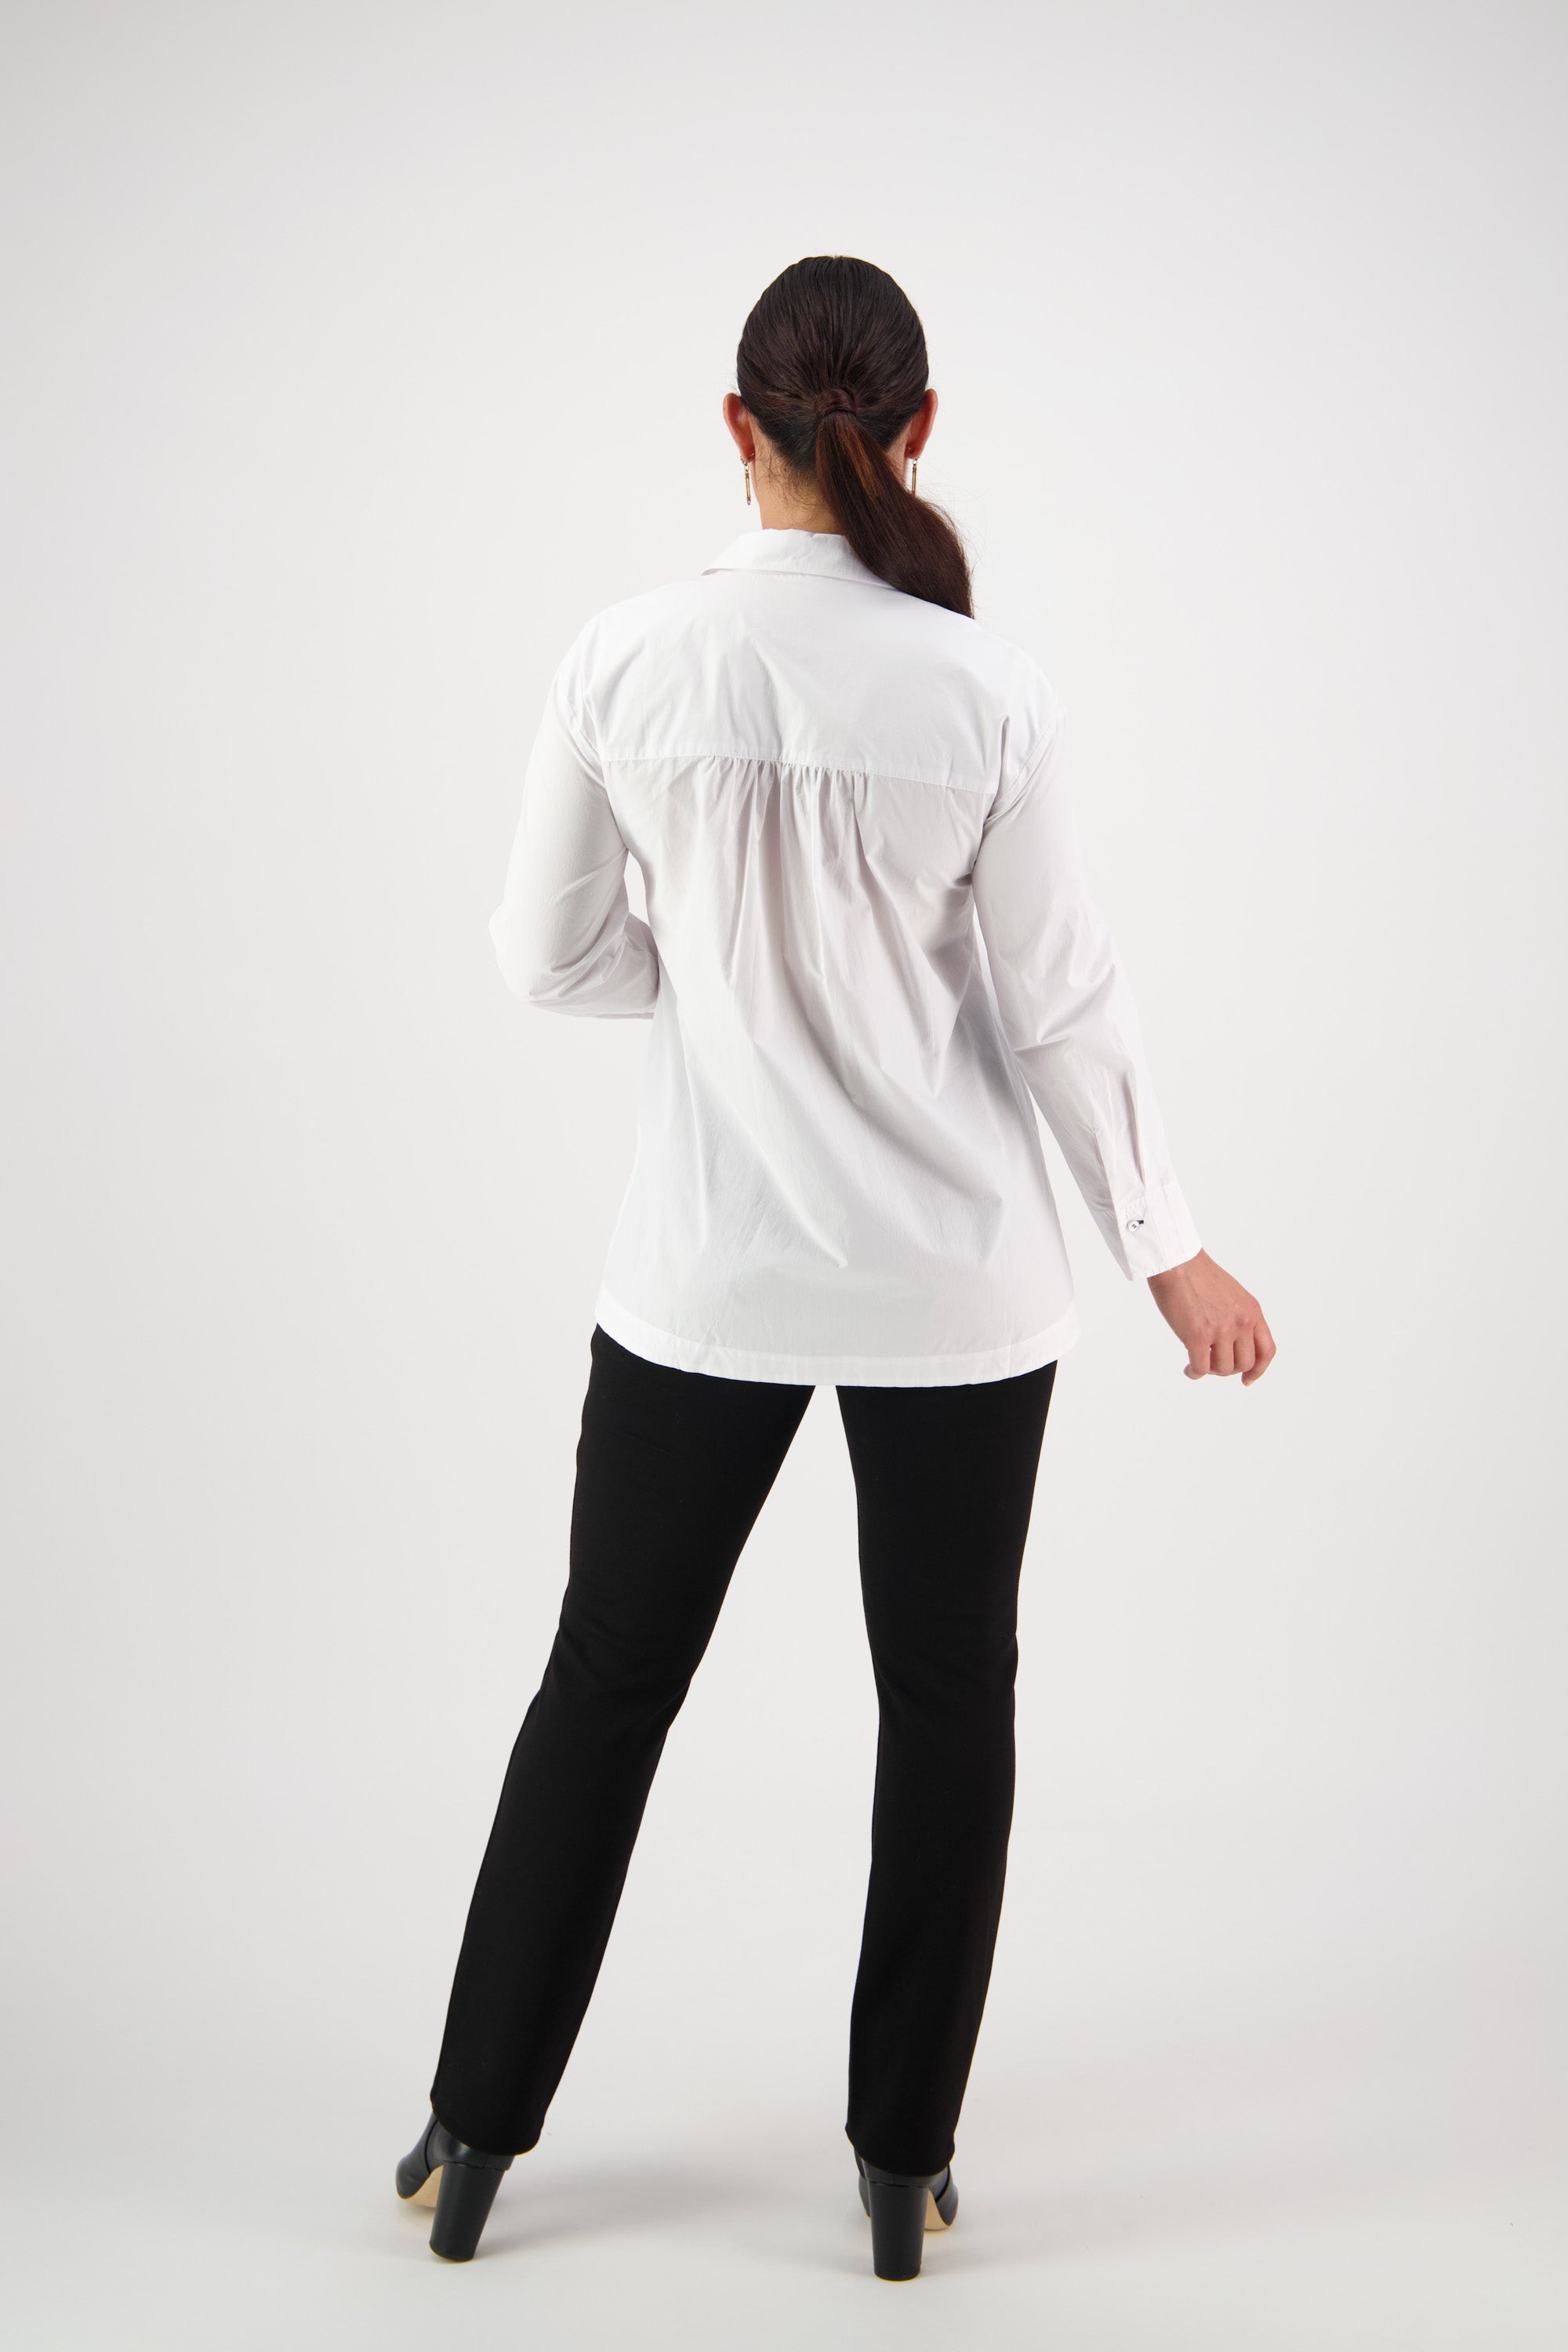 Vassalli Contrast Coloured Stitching Shirt - White/Ink